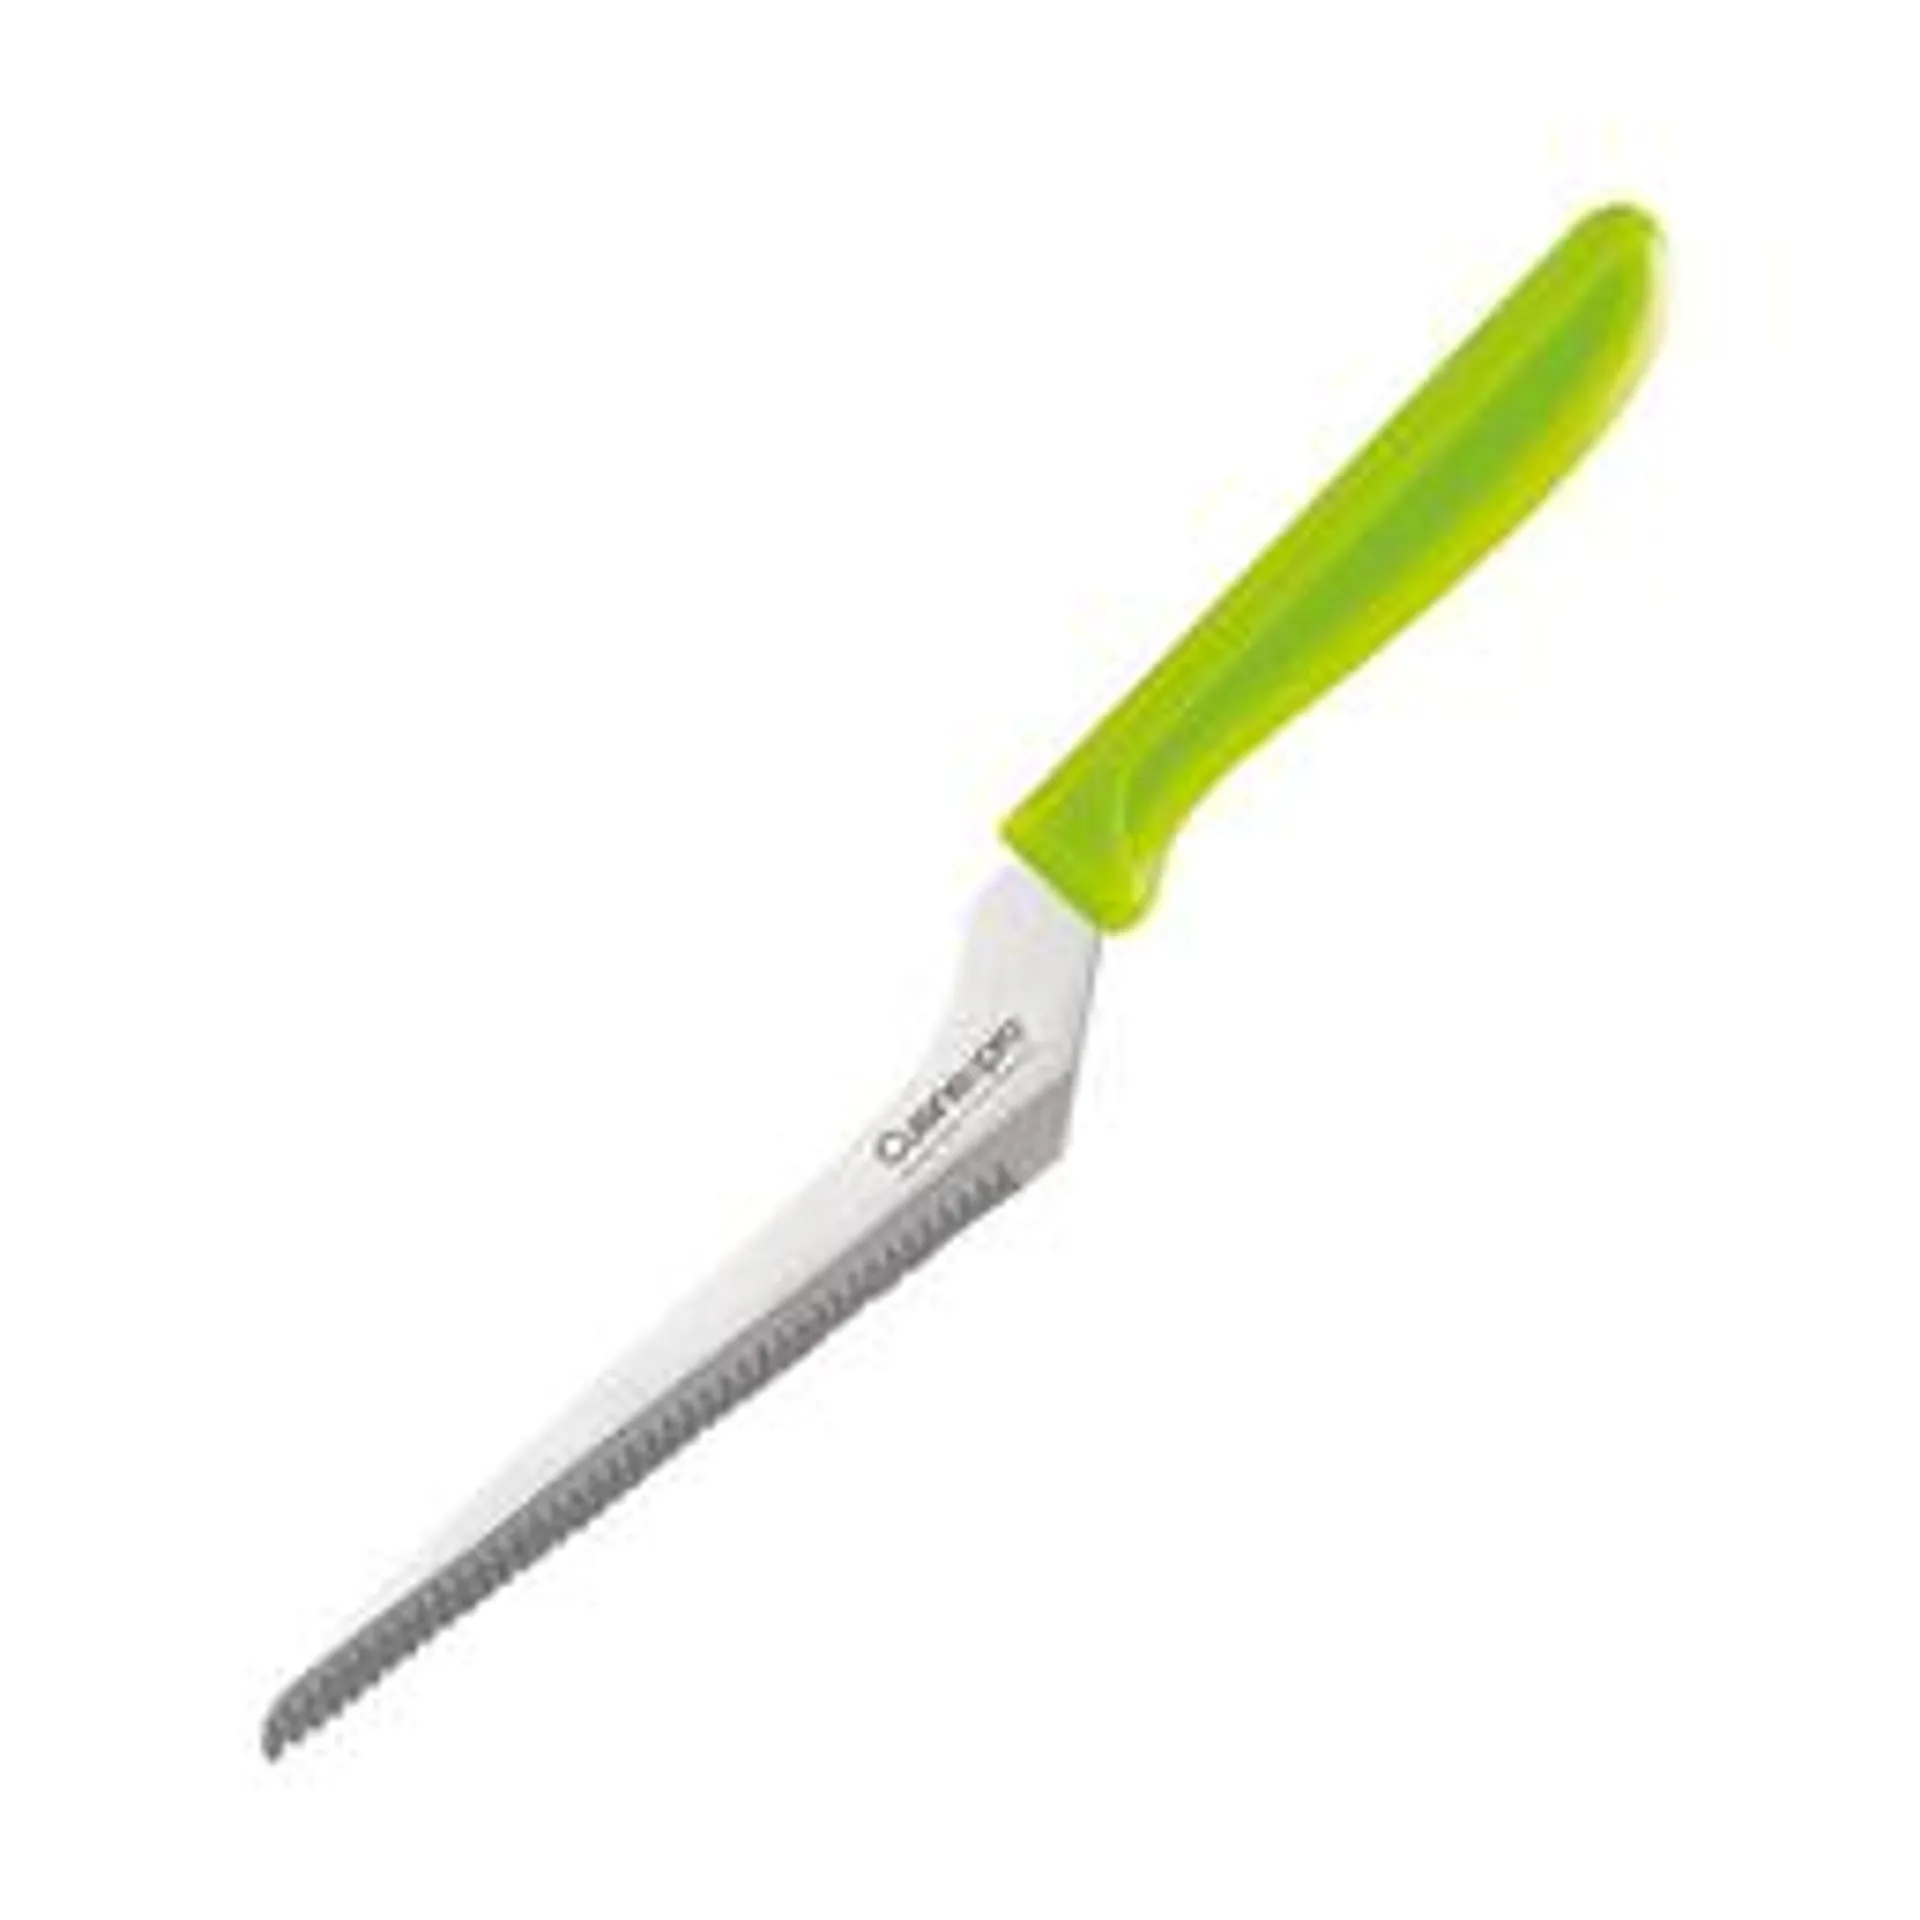 Cuisine::pro Classic Offset Knife, Green, 15cm